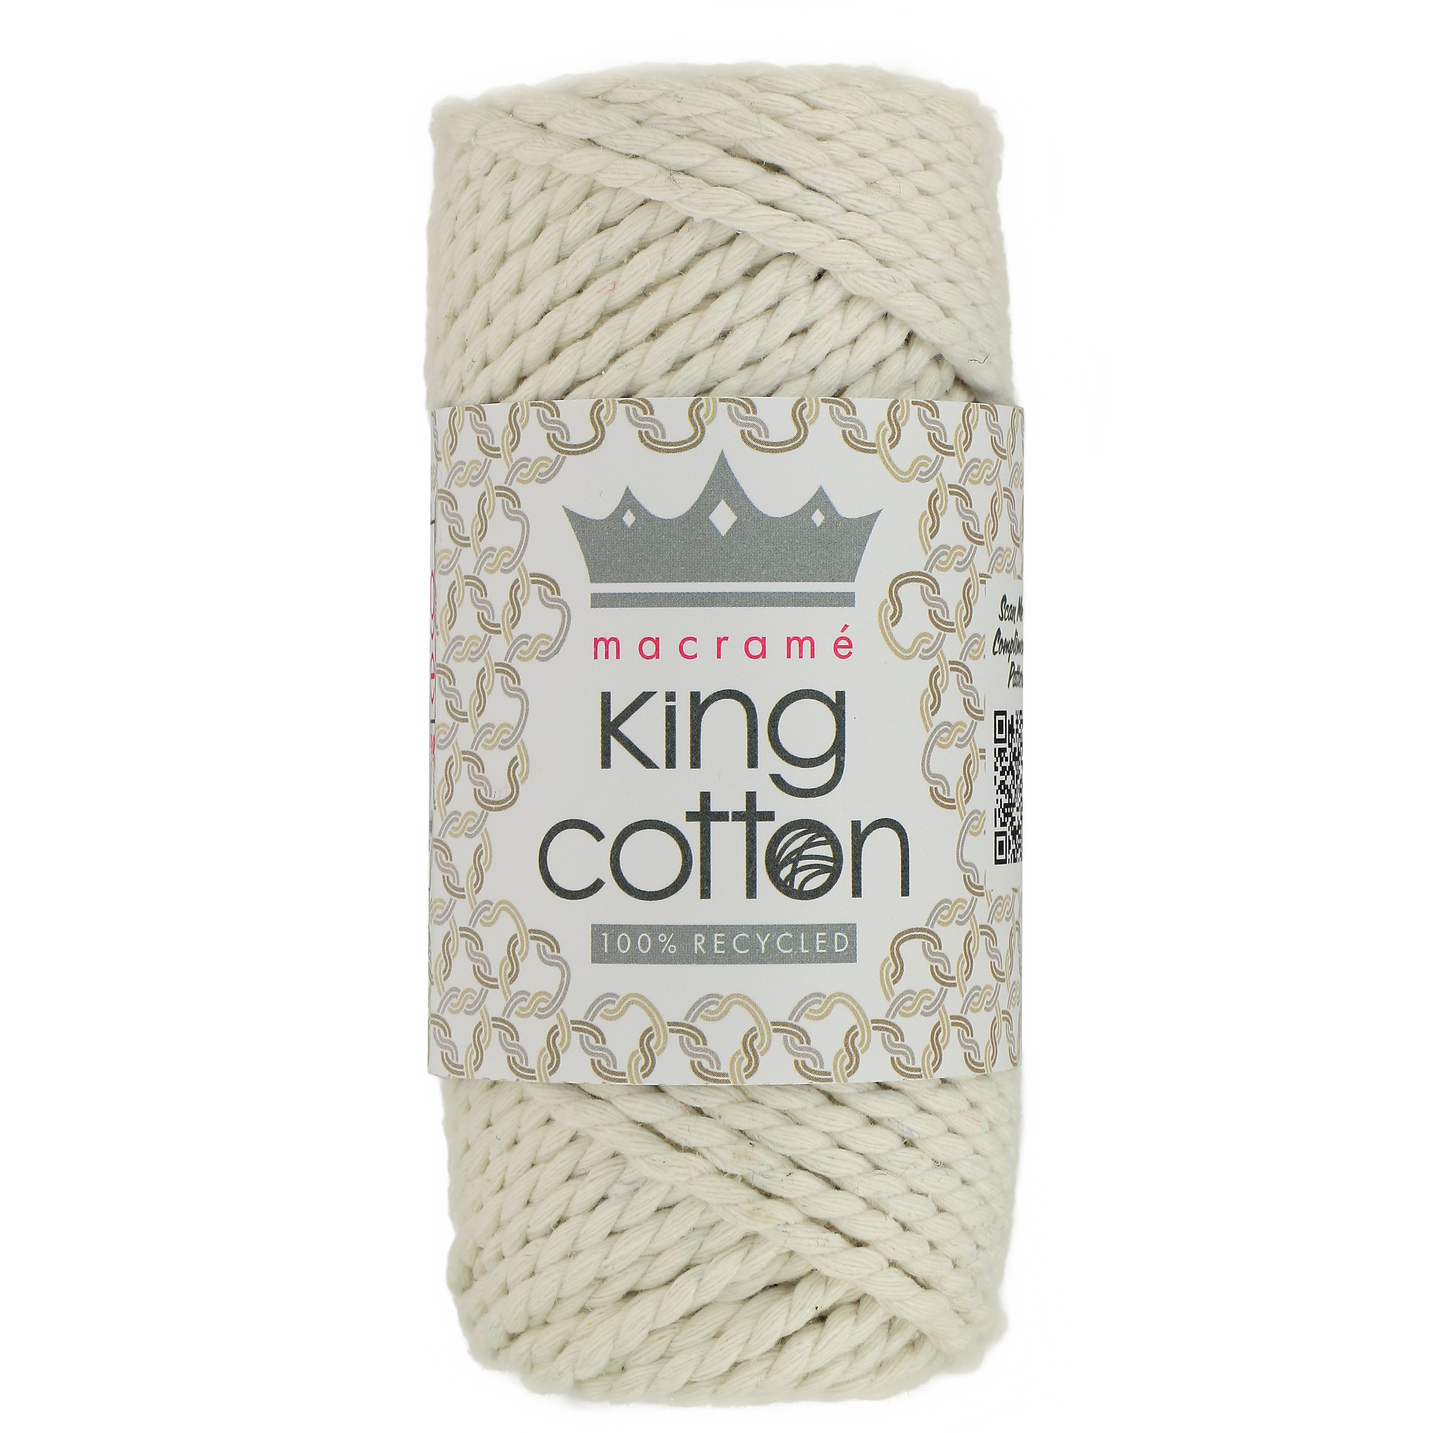 King Cole Macrame King Cotton